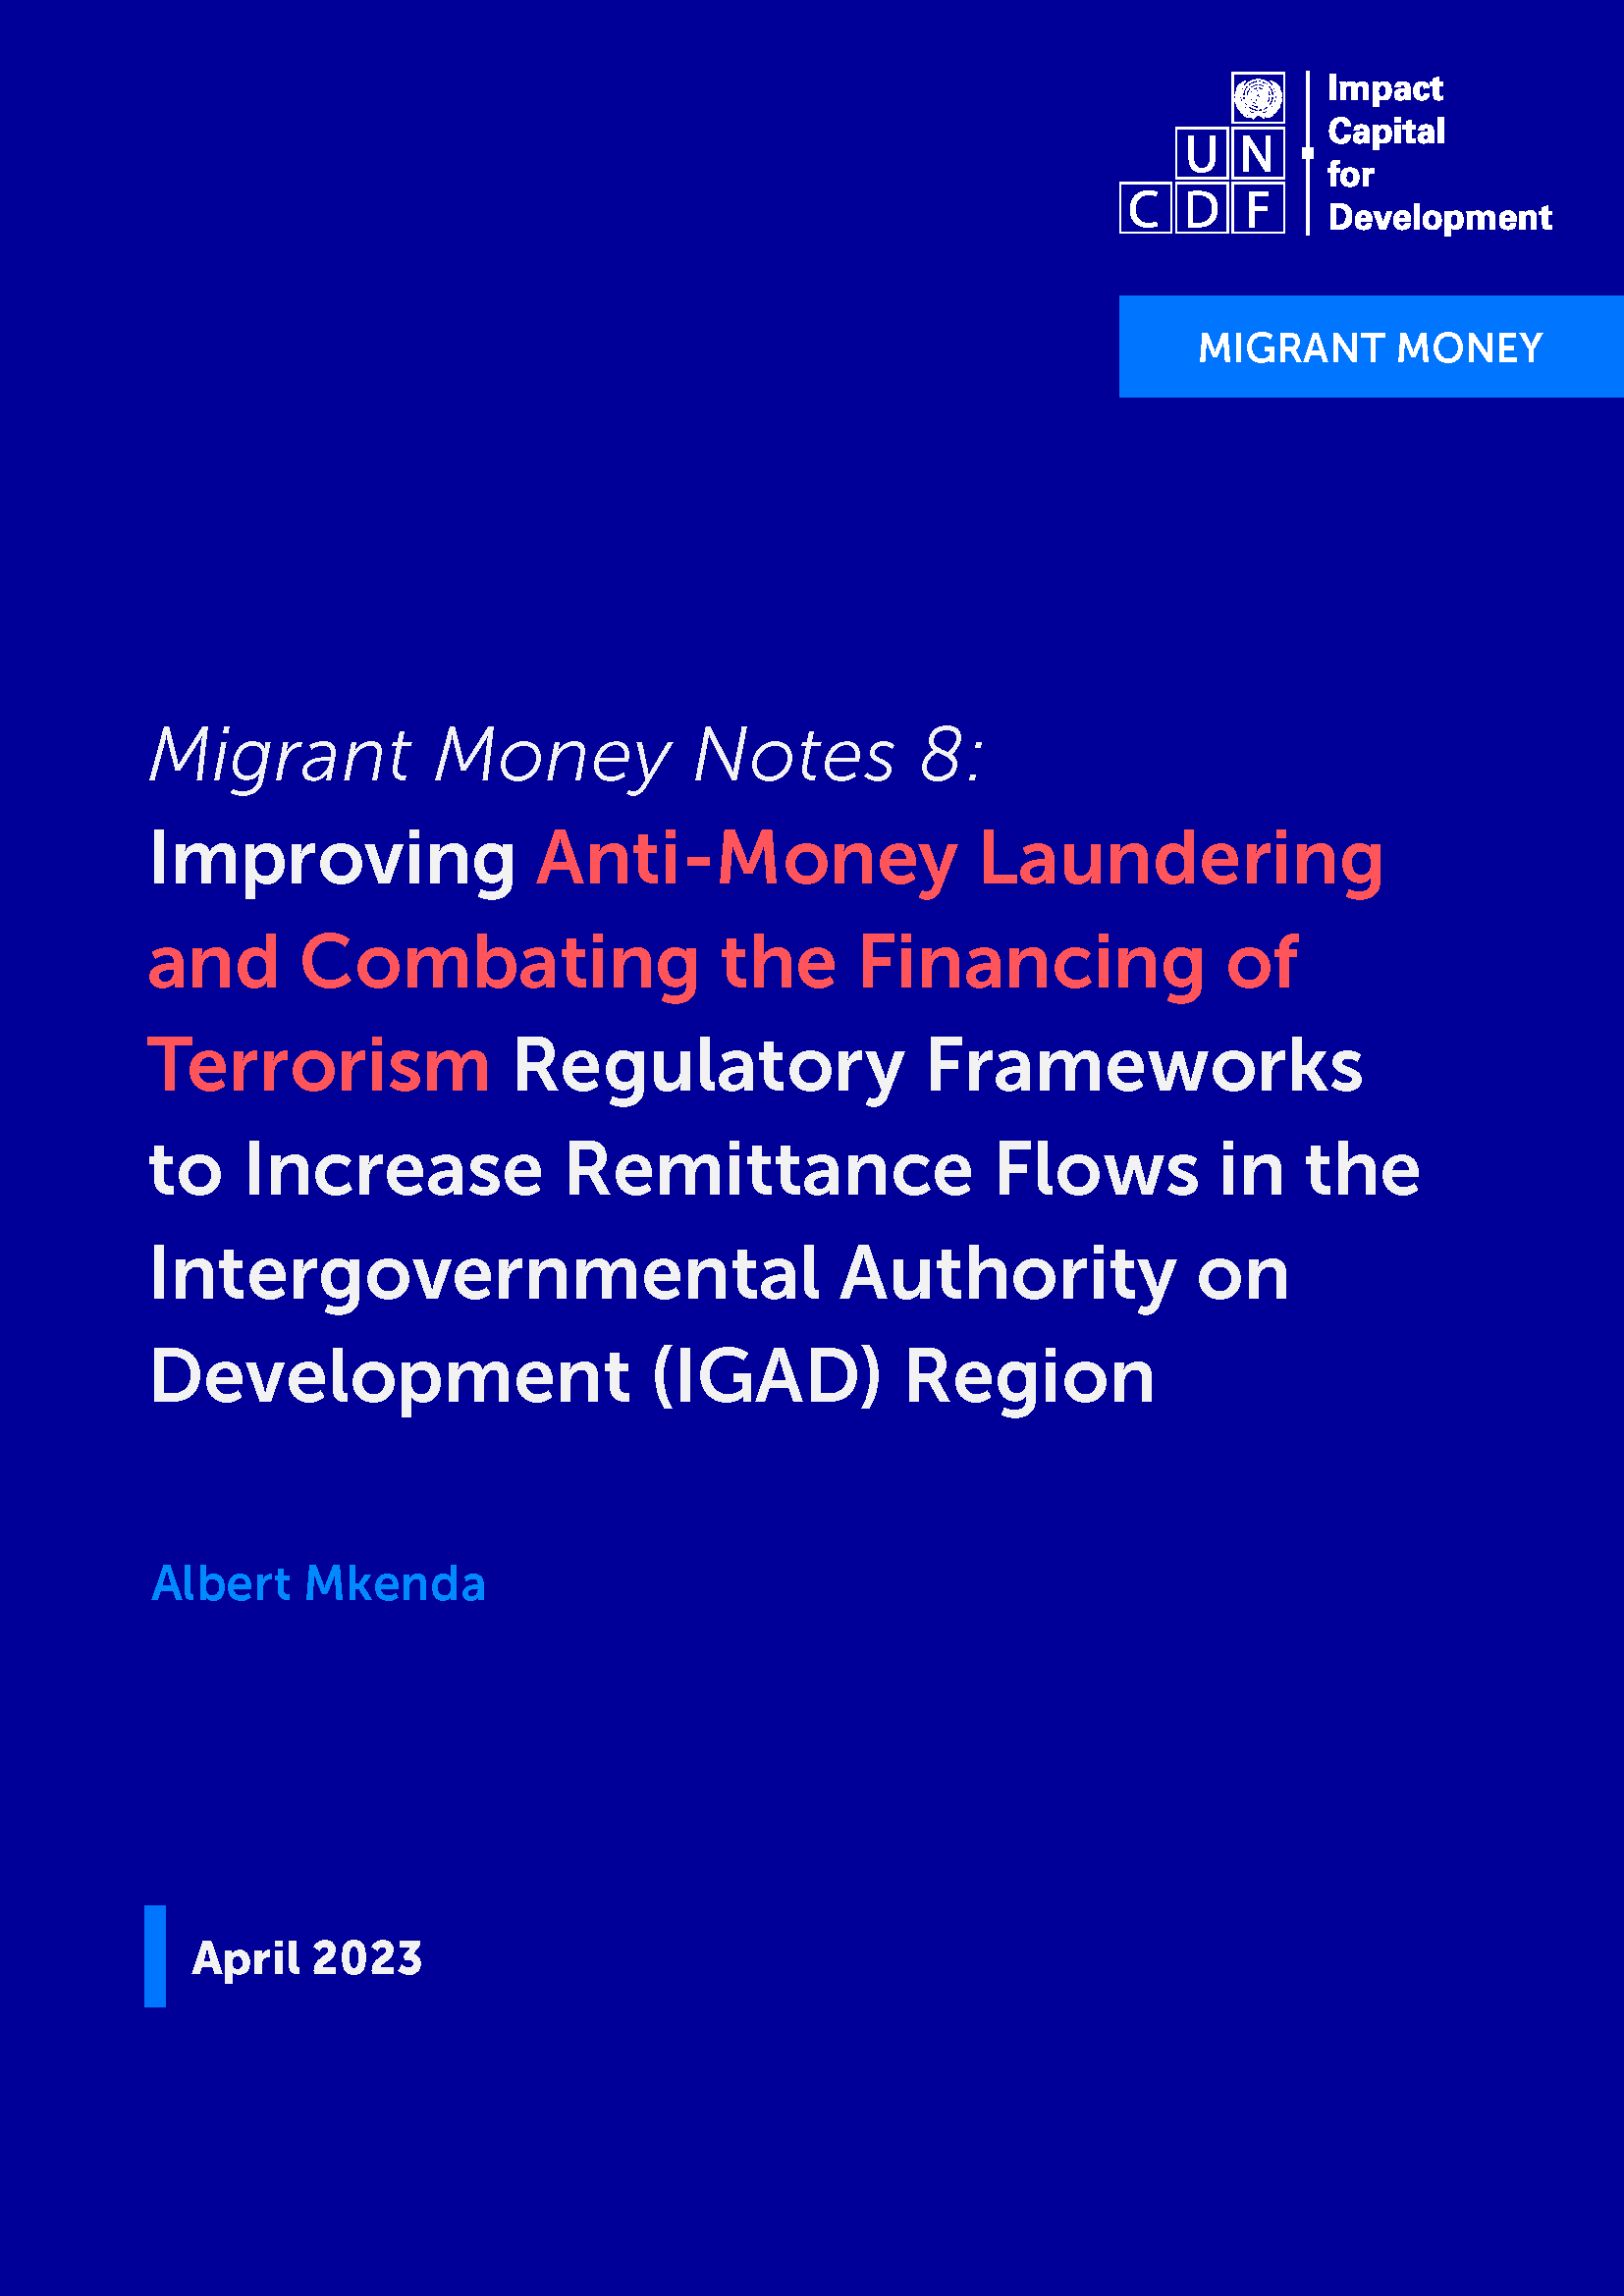 Improving AML/CFT Regulatory Frameworks to Increase Remittance Flows in the IGAD Region